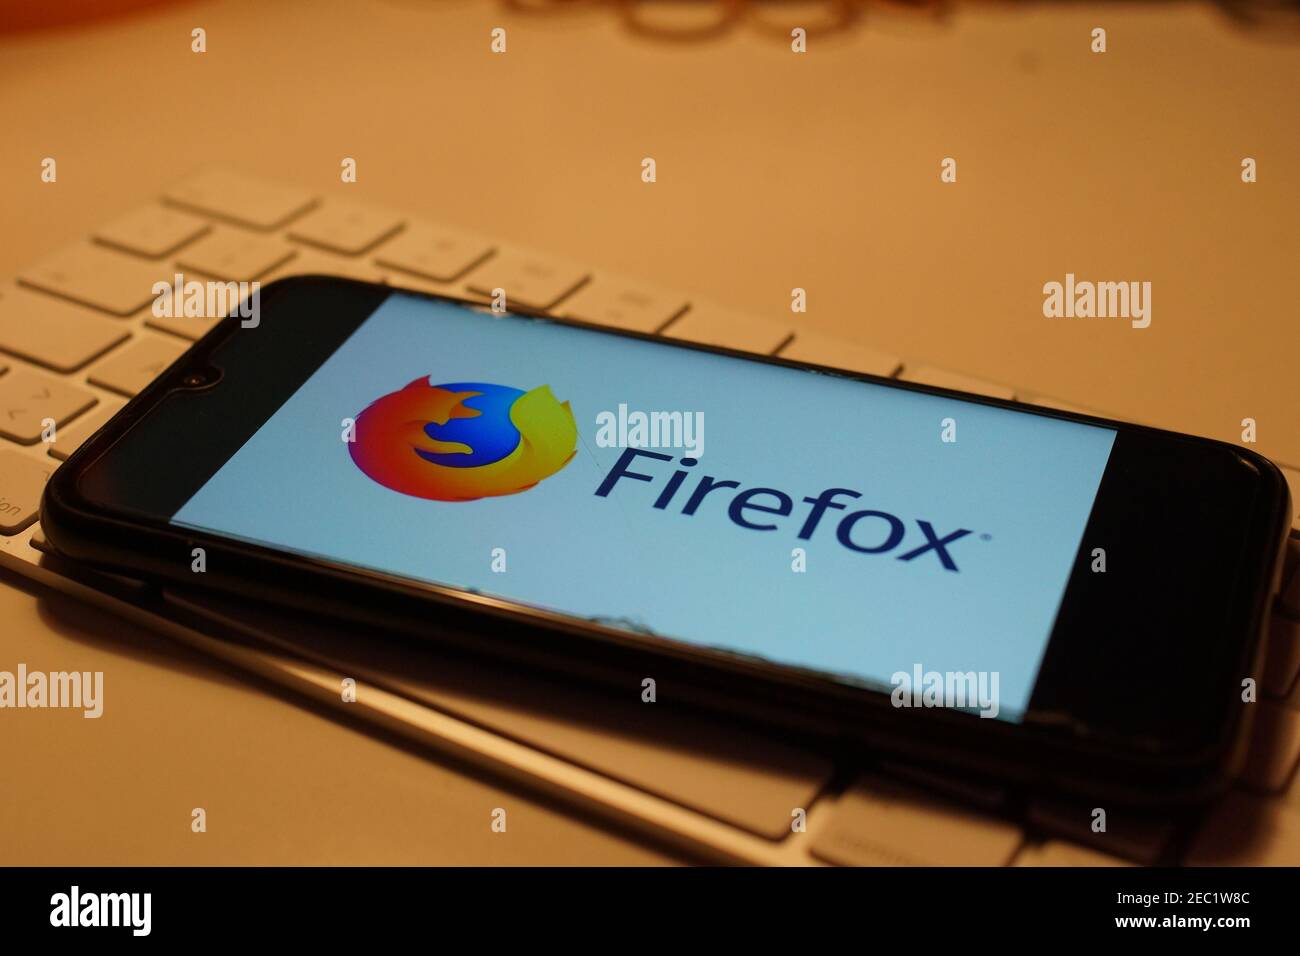 Smartphone with Firefox logo on computer keyboard Stock Photo